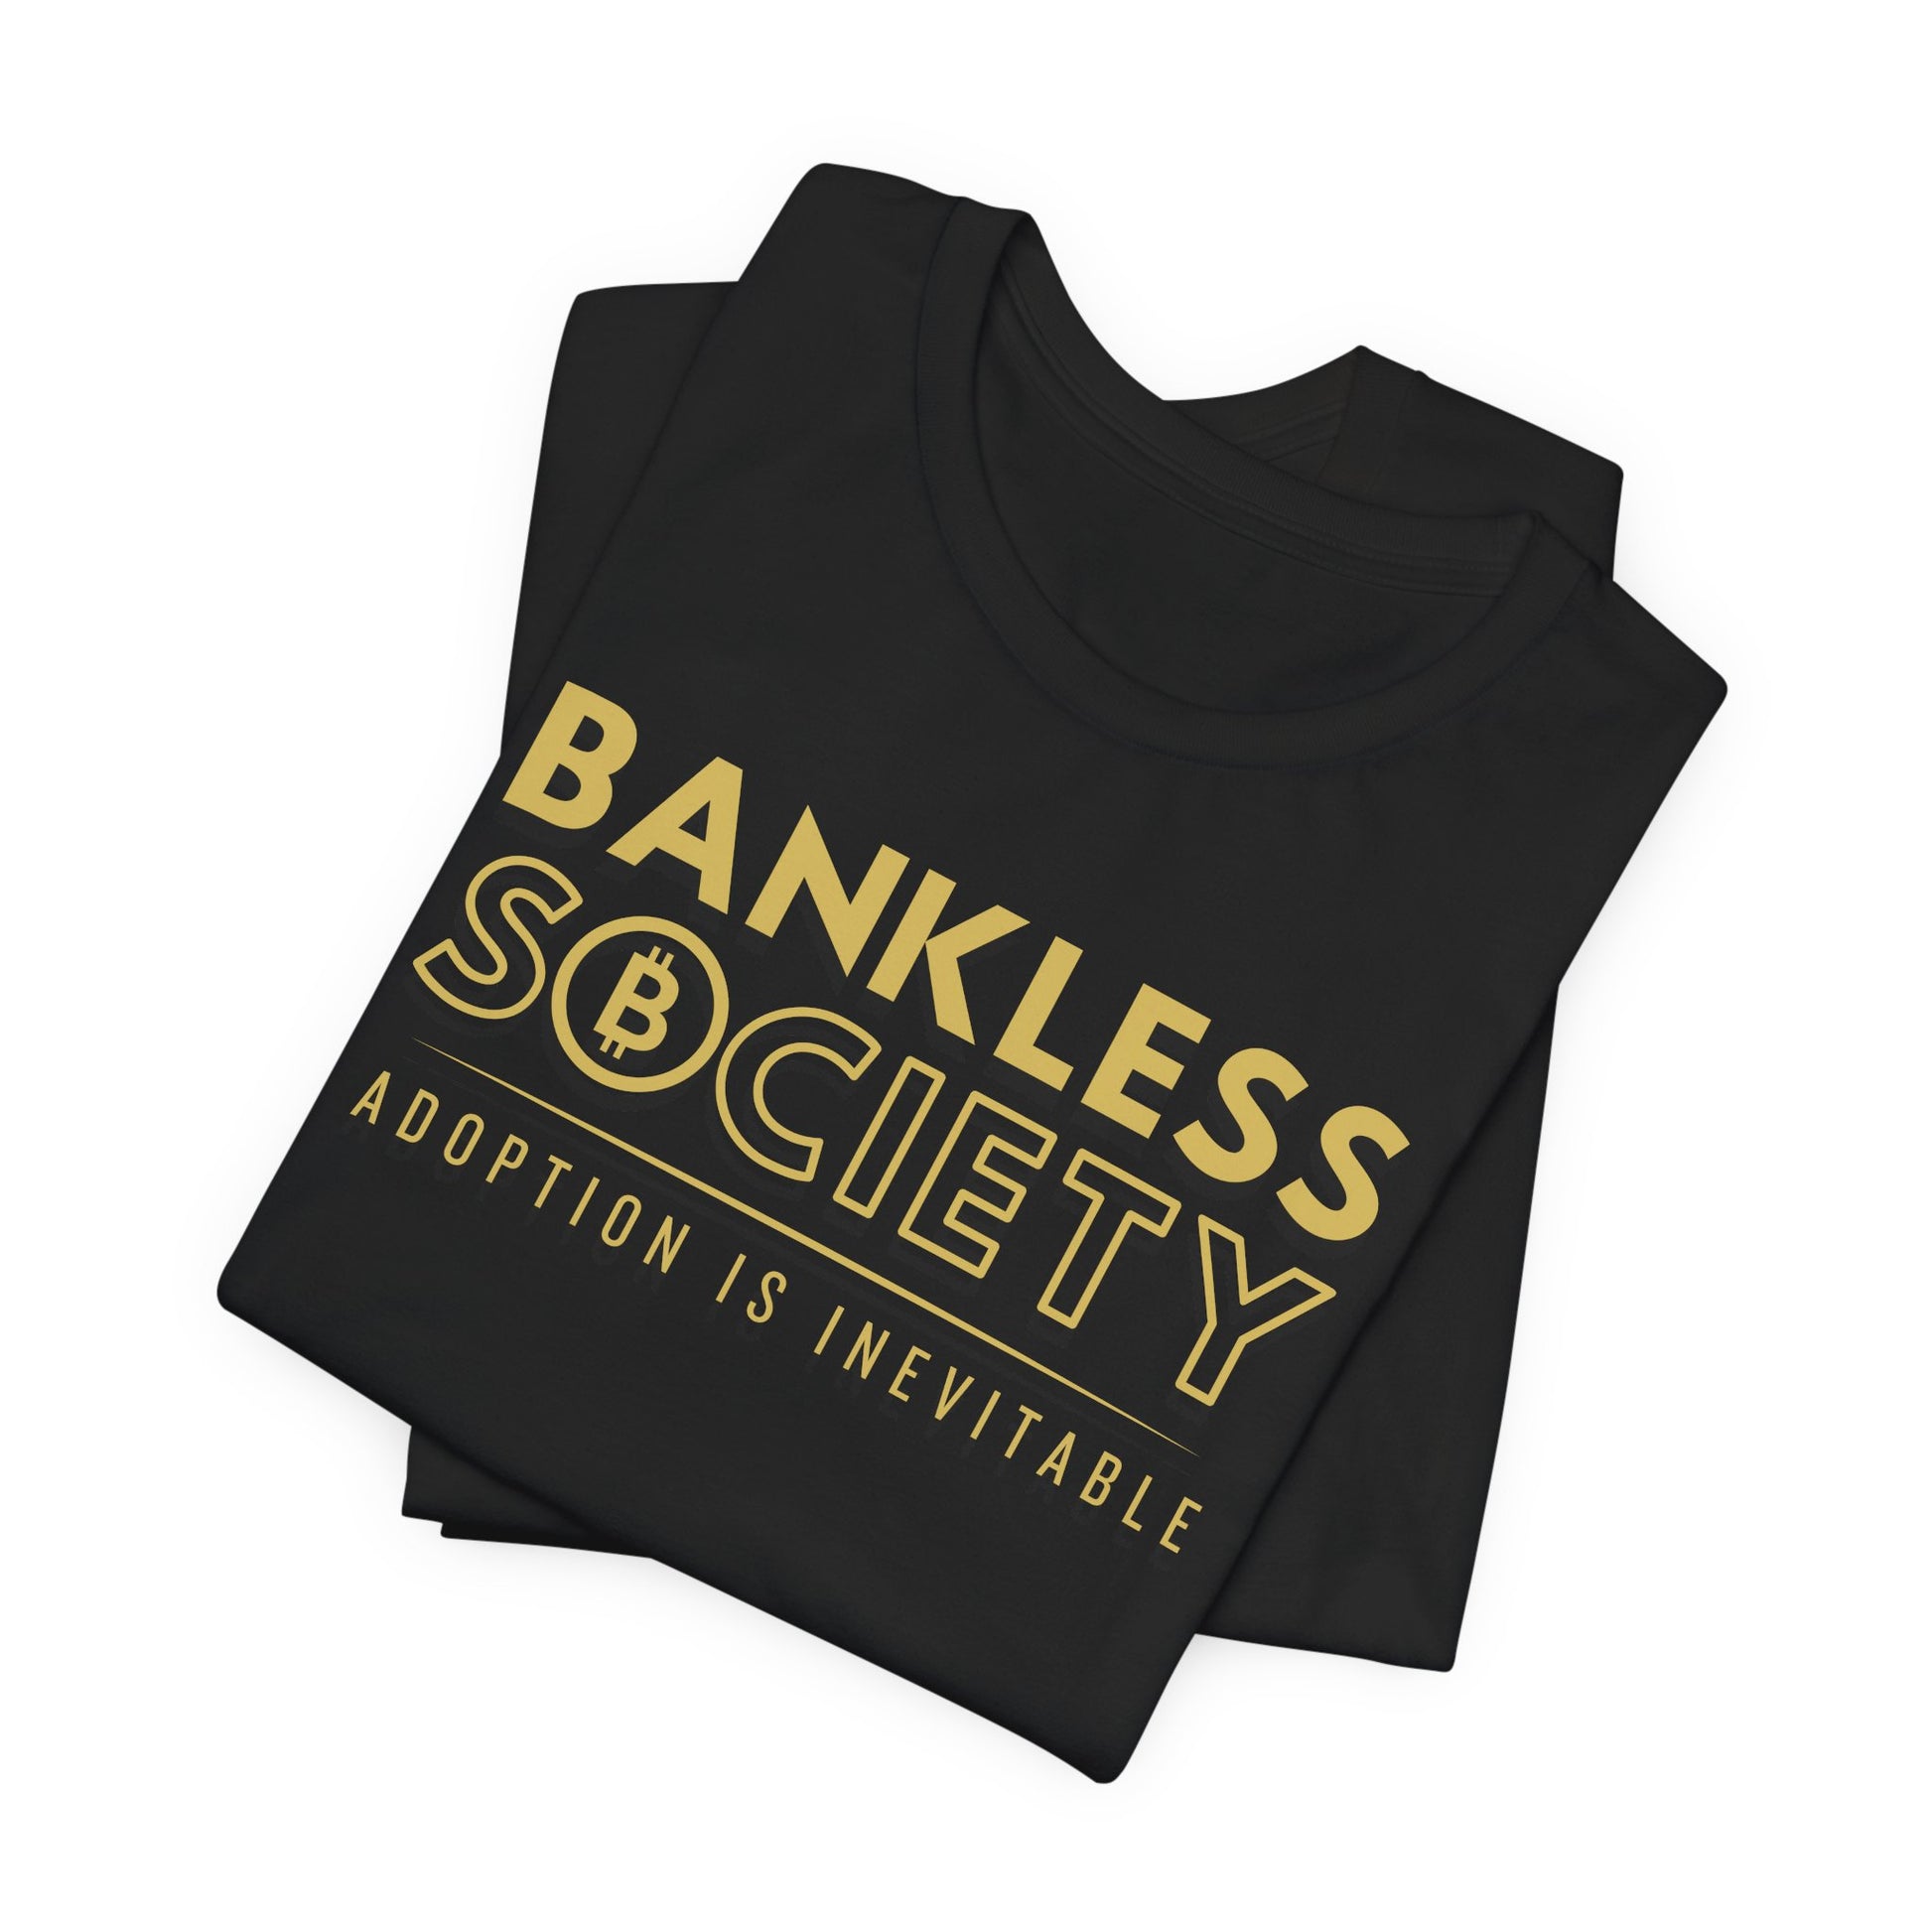 Black Bella Canvas 3001 unisex t-shirt. Bankless Society, Adoption is Inevitable